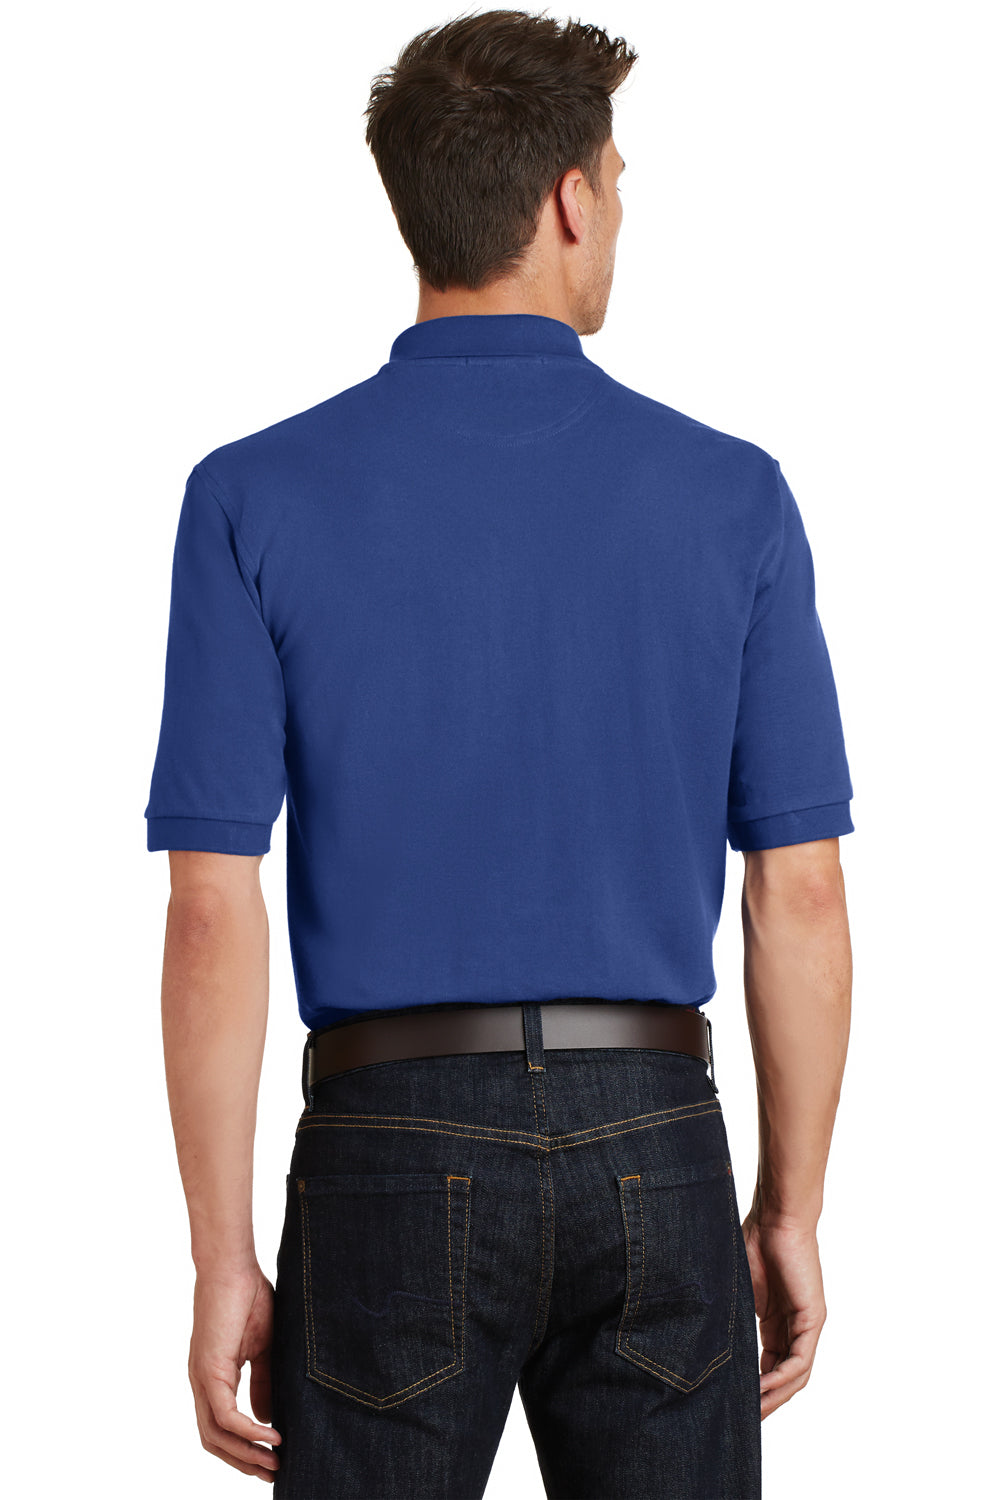 Port Authority K420P Mens Short Sleeve Polo Shirt w/ Pocket Royal Blue Back